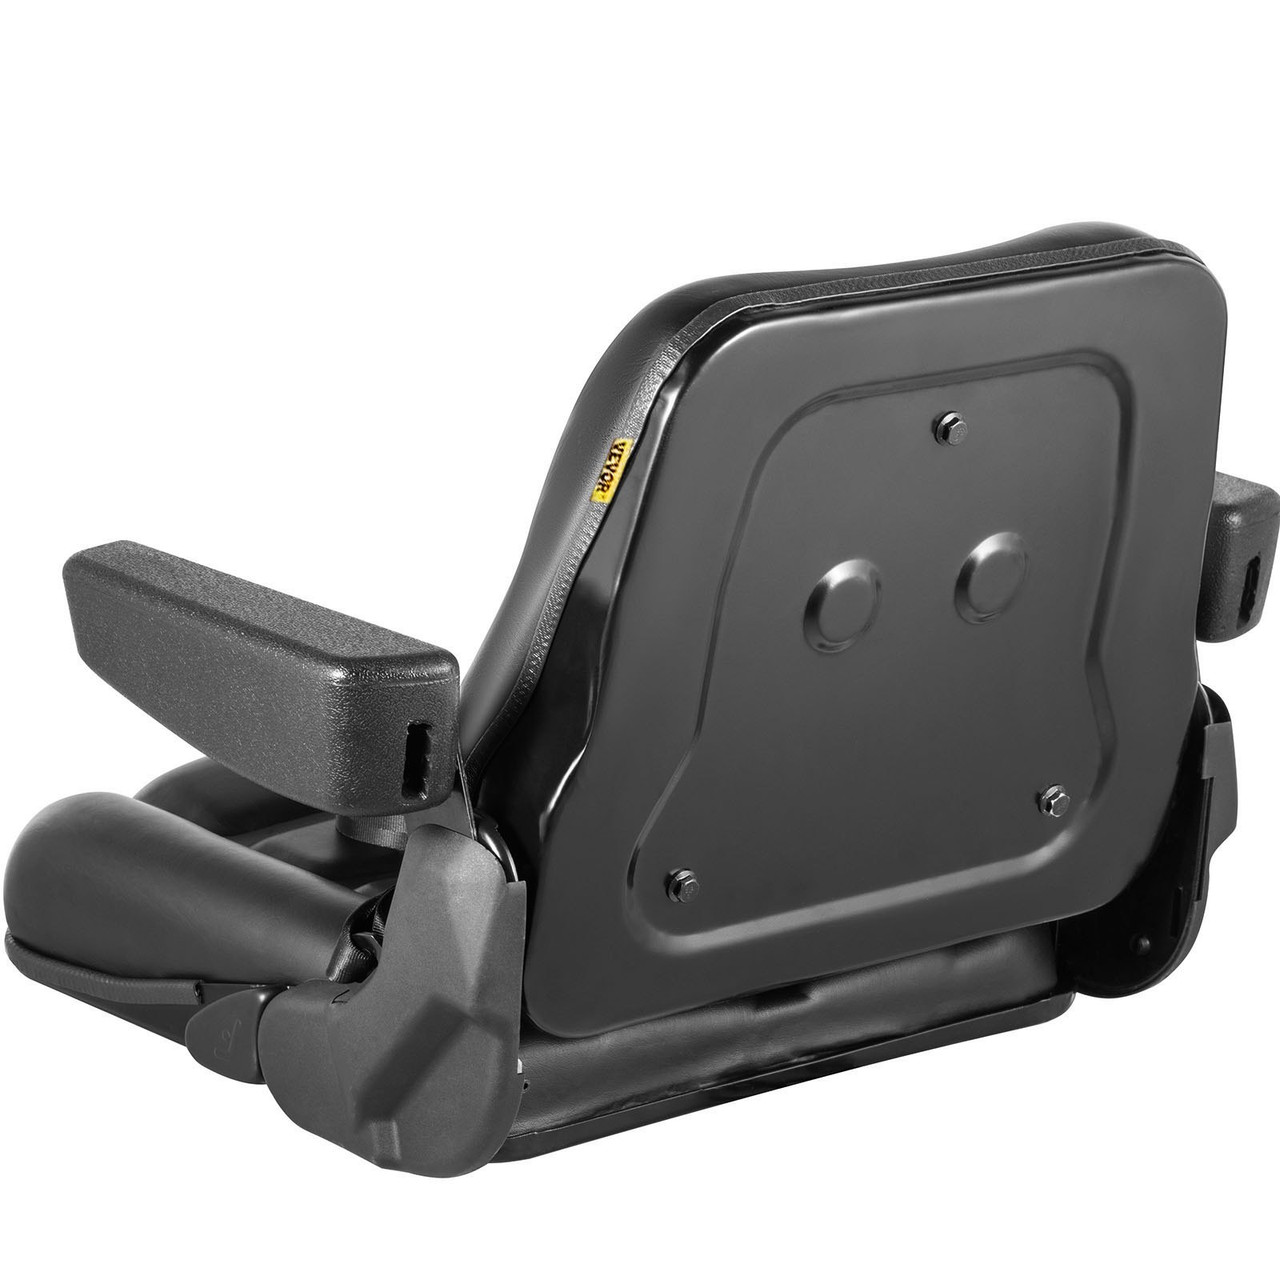 VEVOR Universal Forklift Seat Black PVC Tractor Seat, 6"/150MM Adjustable Mower Seat Foldable Seat Including Armrests, Seat Belt, Seat Switch, Skid Steer Seat Fit Forklift, Tractor, Skid Loader